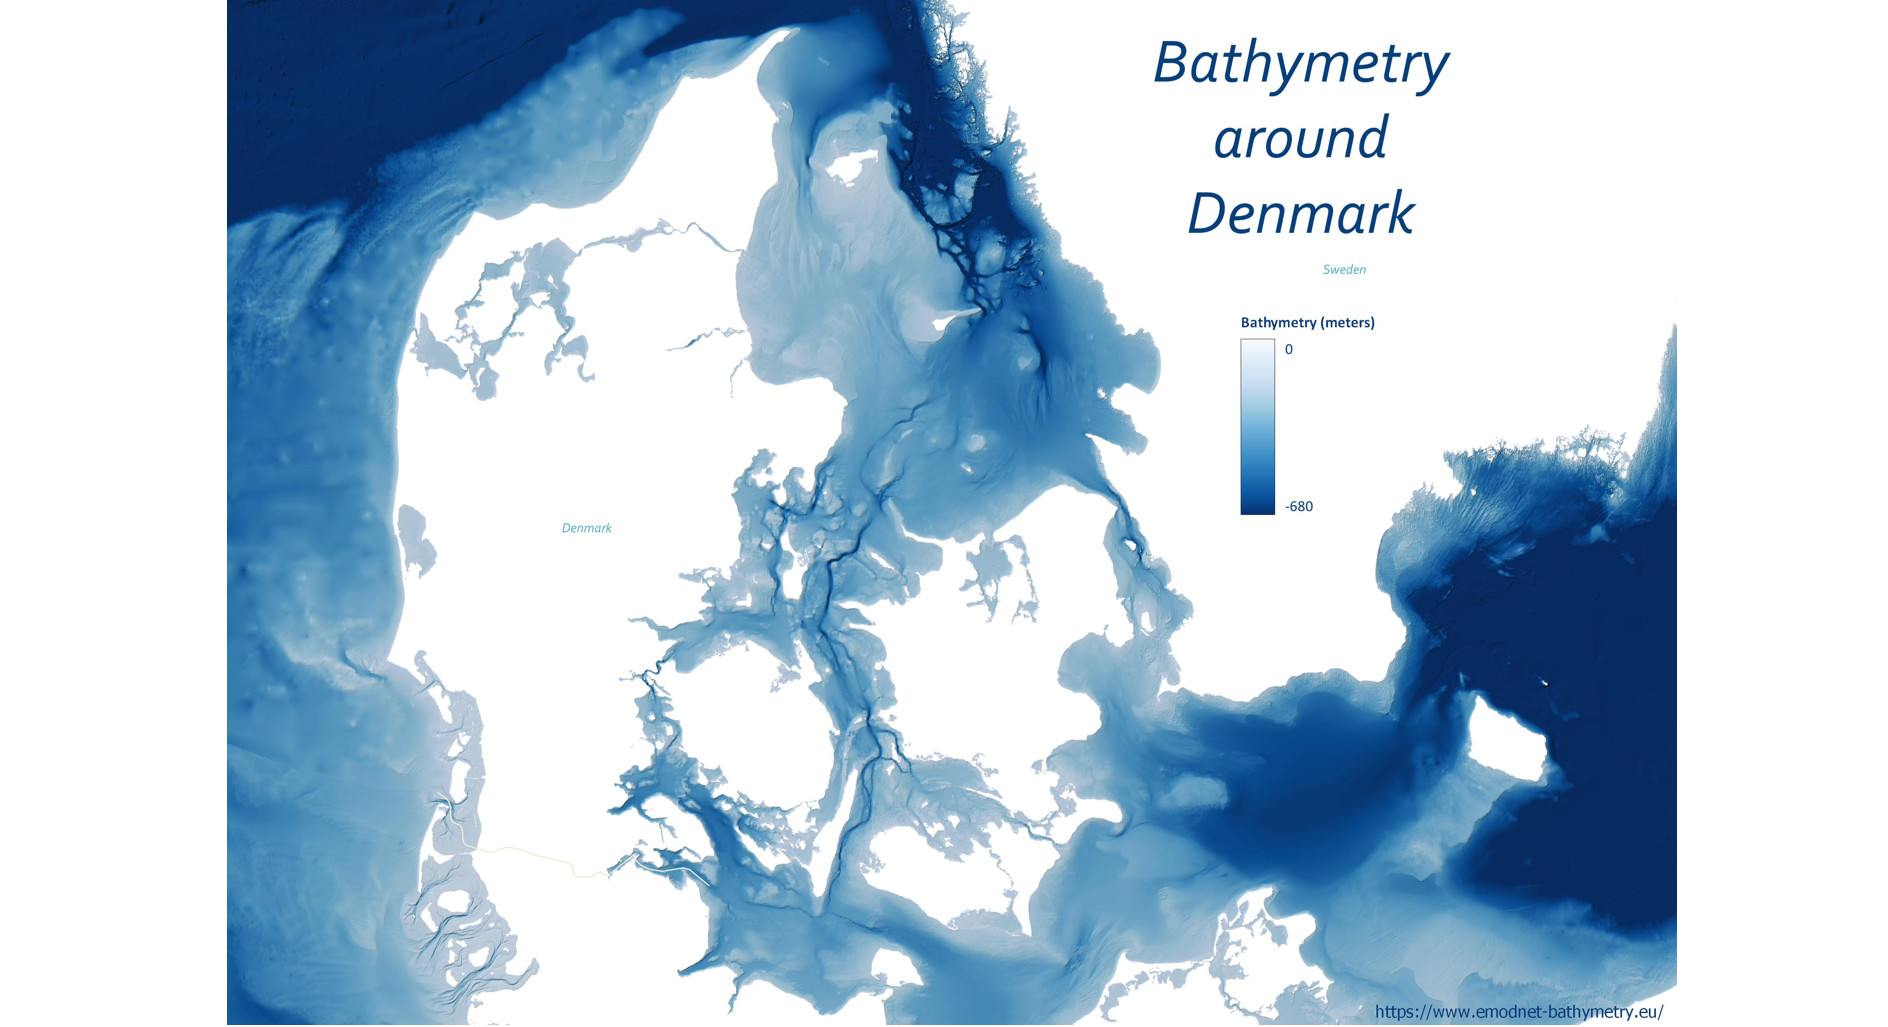 Bathymetry around Denmark